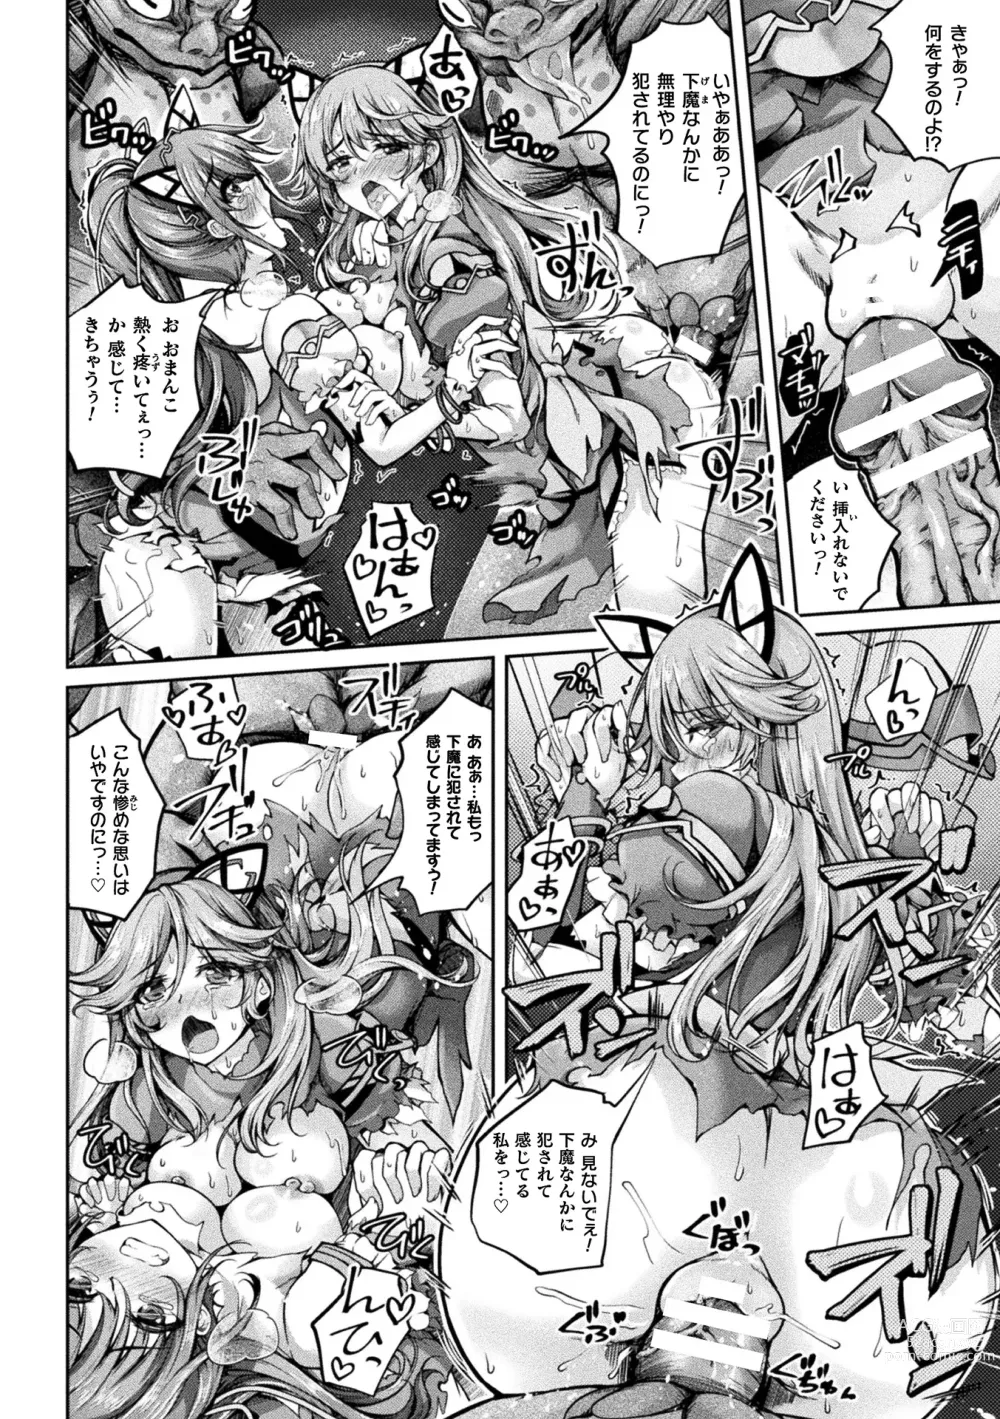 Page 16 of manga Kukkoro Heroines Vol. 33